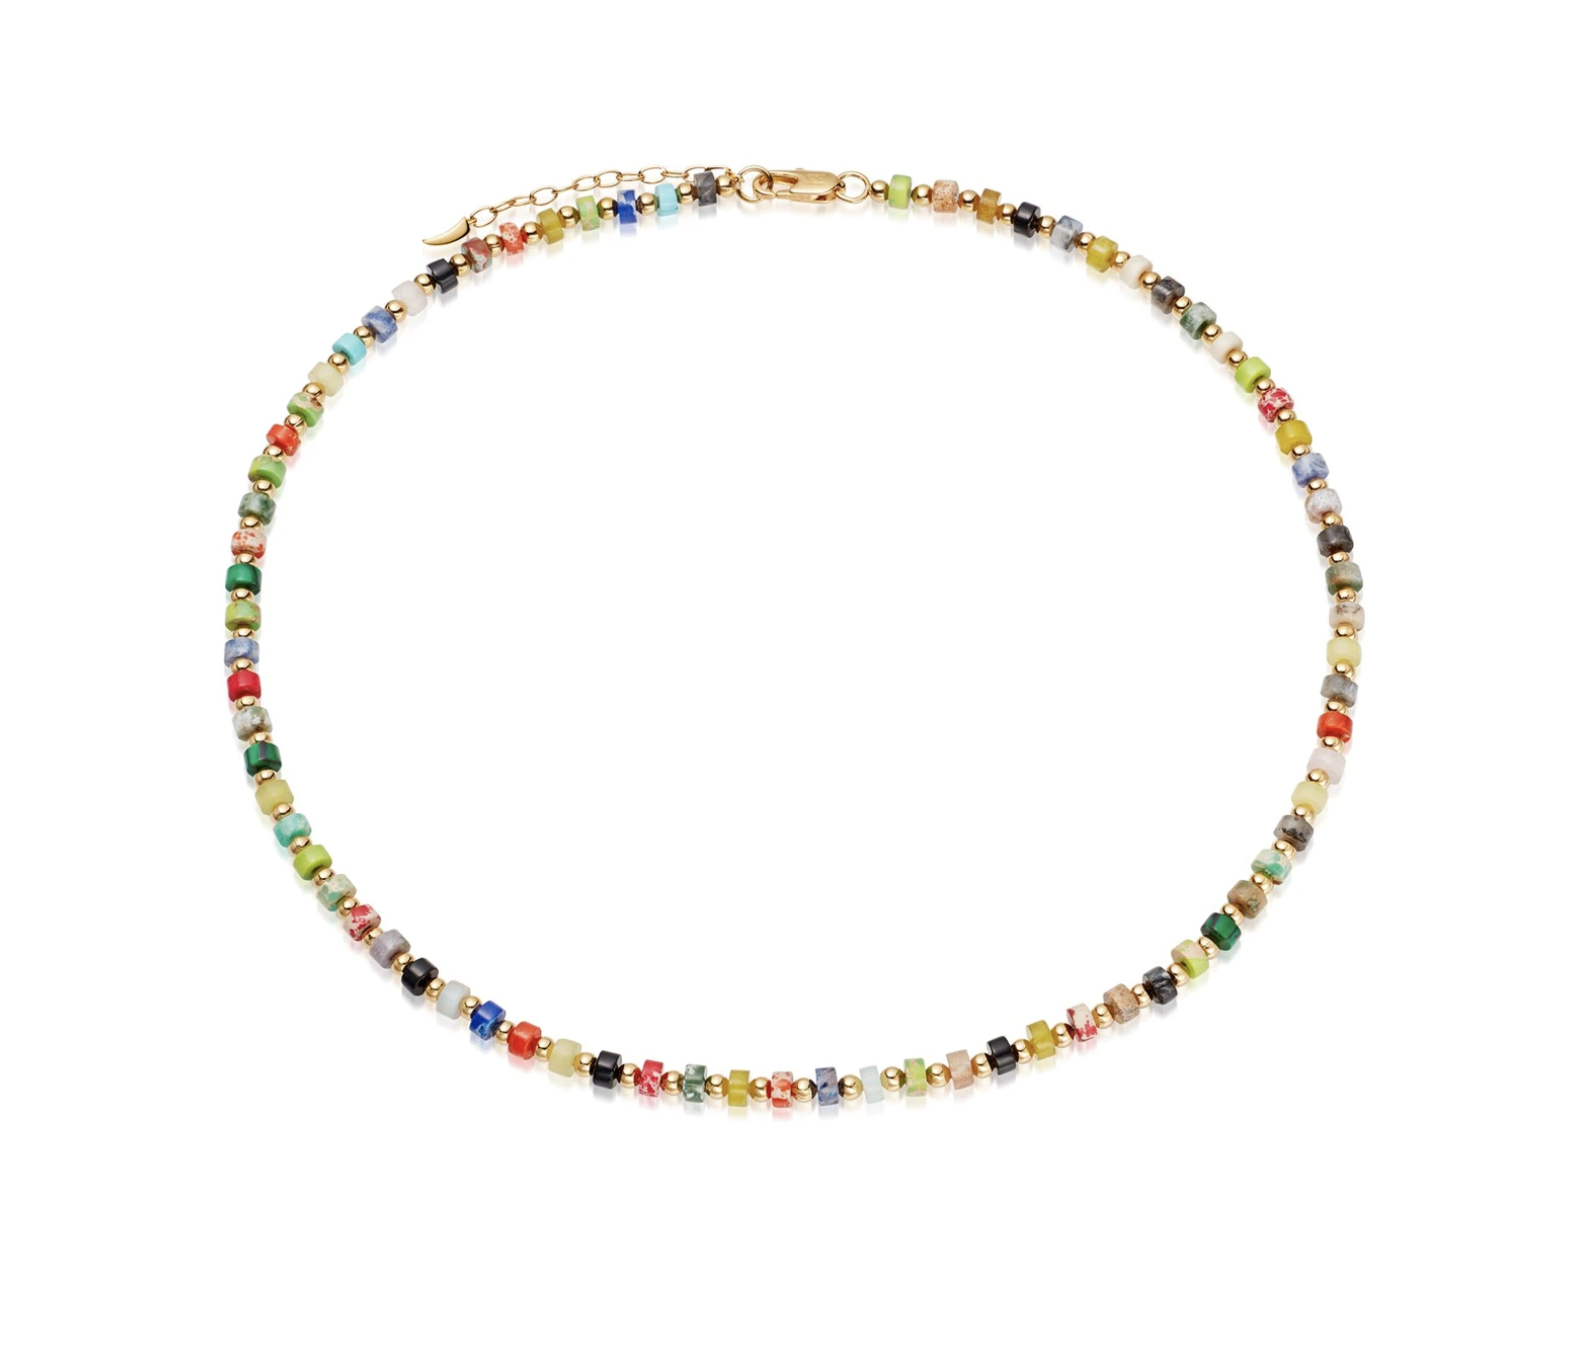 This is Emily Ratajkowski's favorite jewelry brand | My Imperfect Life